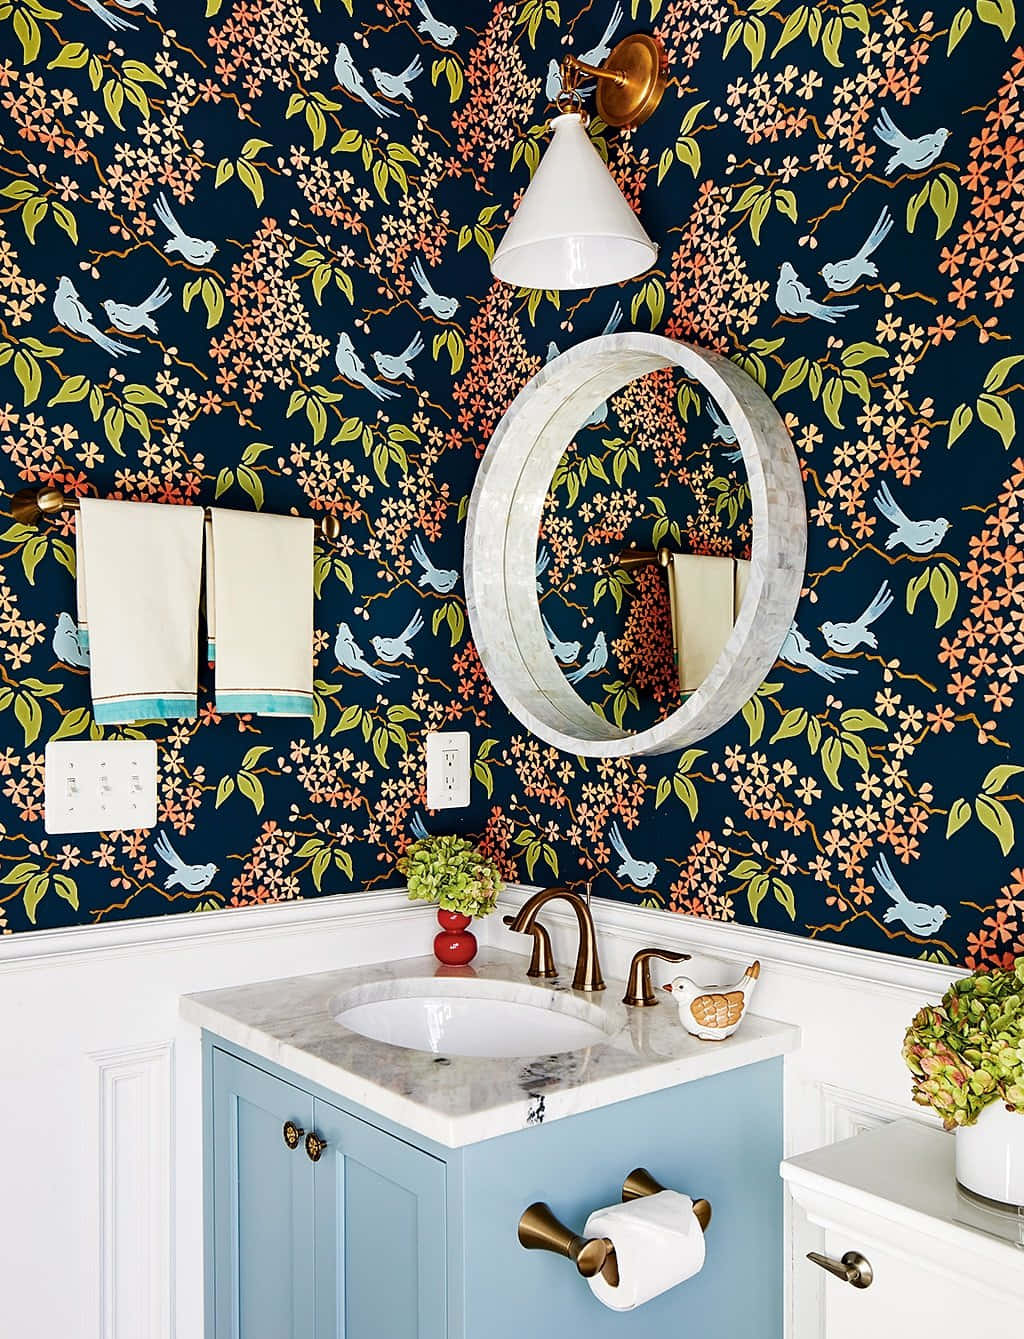 Bathroom Bird Patterned Walls Background